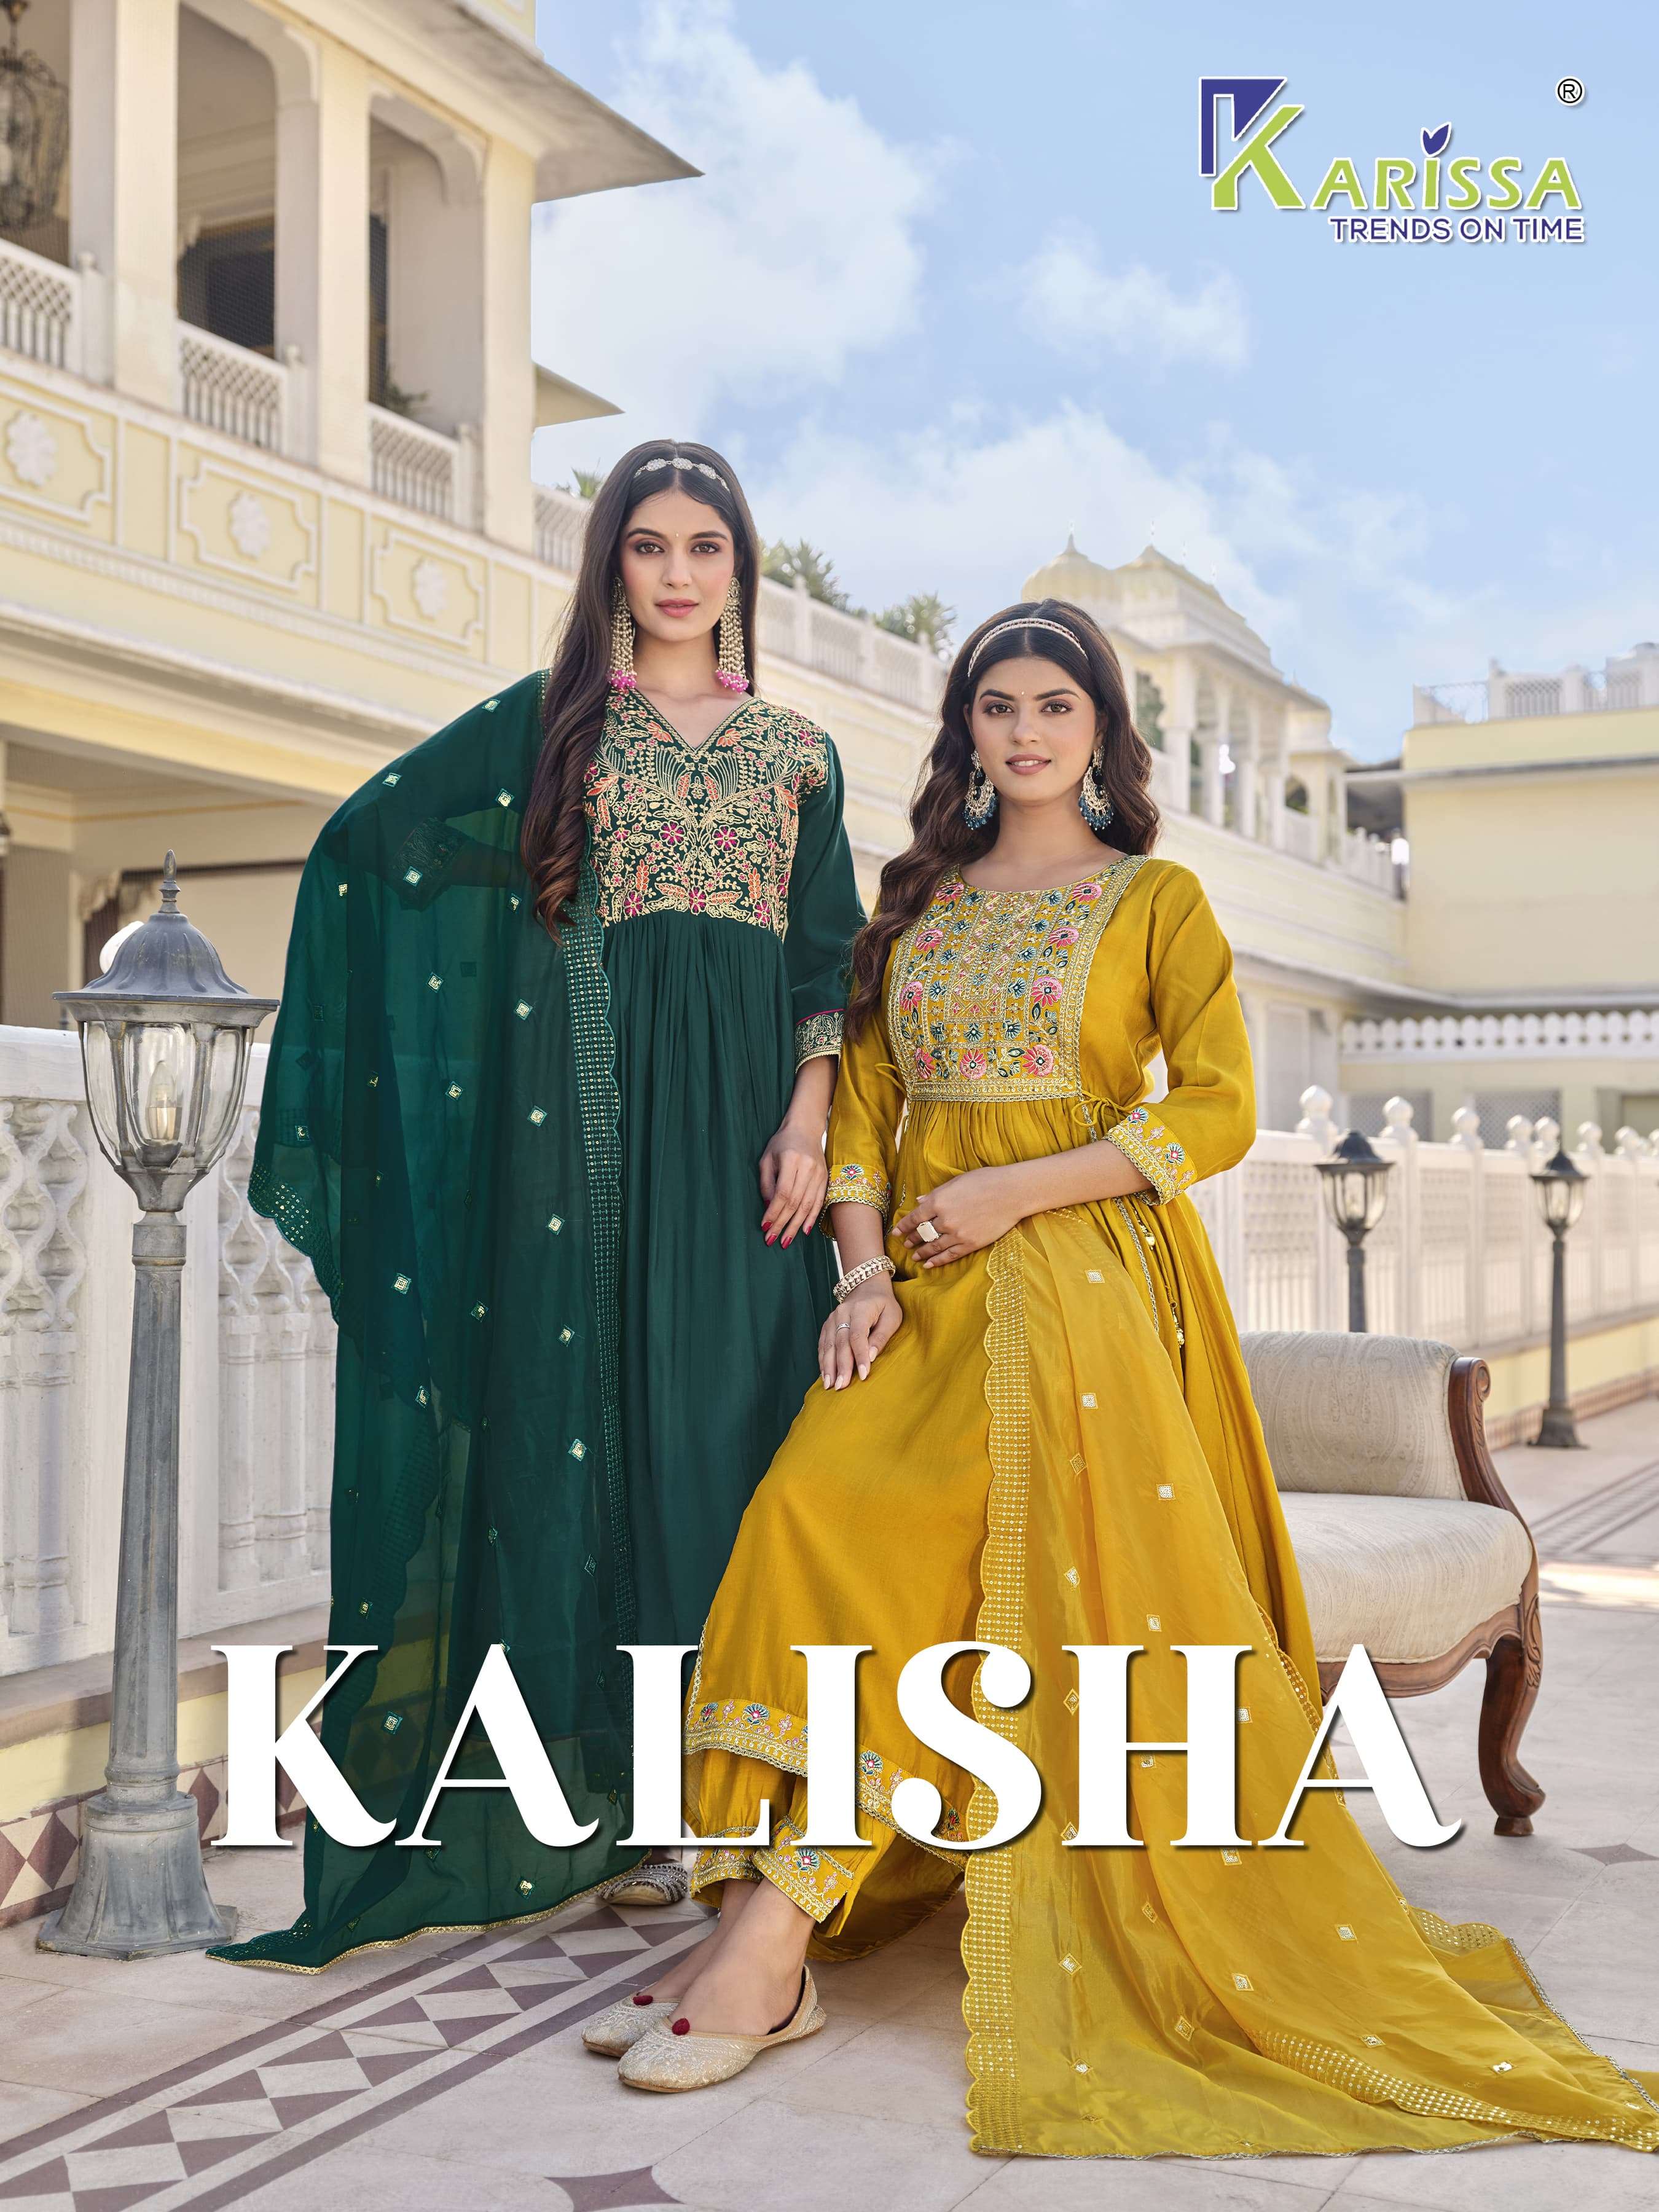 Kalisha Buy Karissa Wholesale Supplier online Lowest Price Viscose Kurta Suit Sets